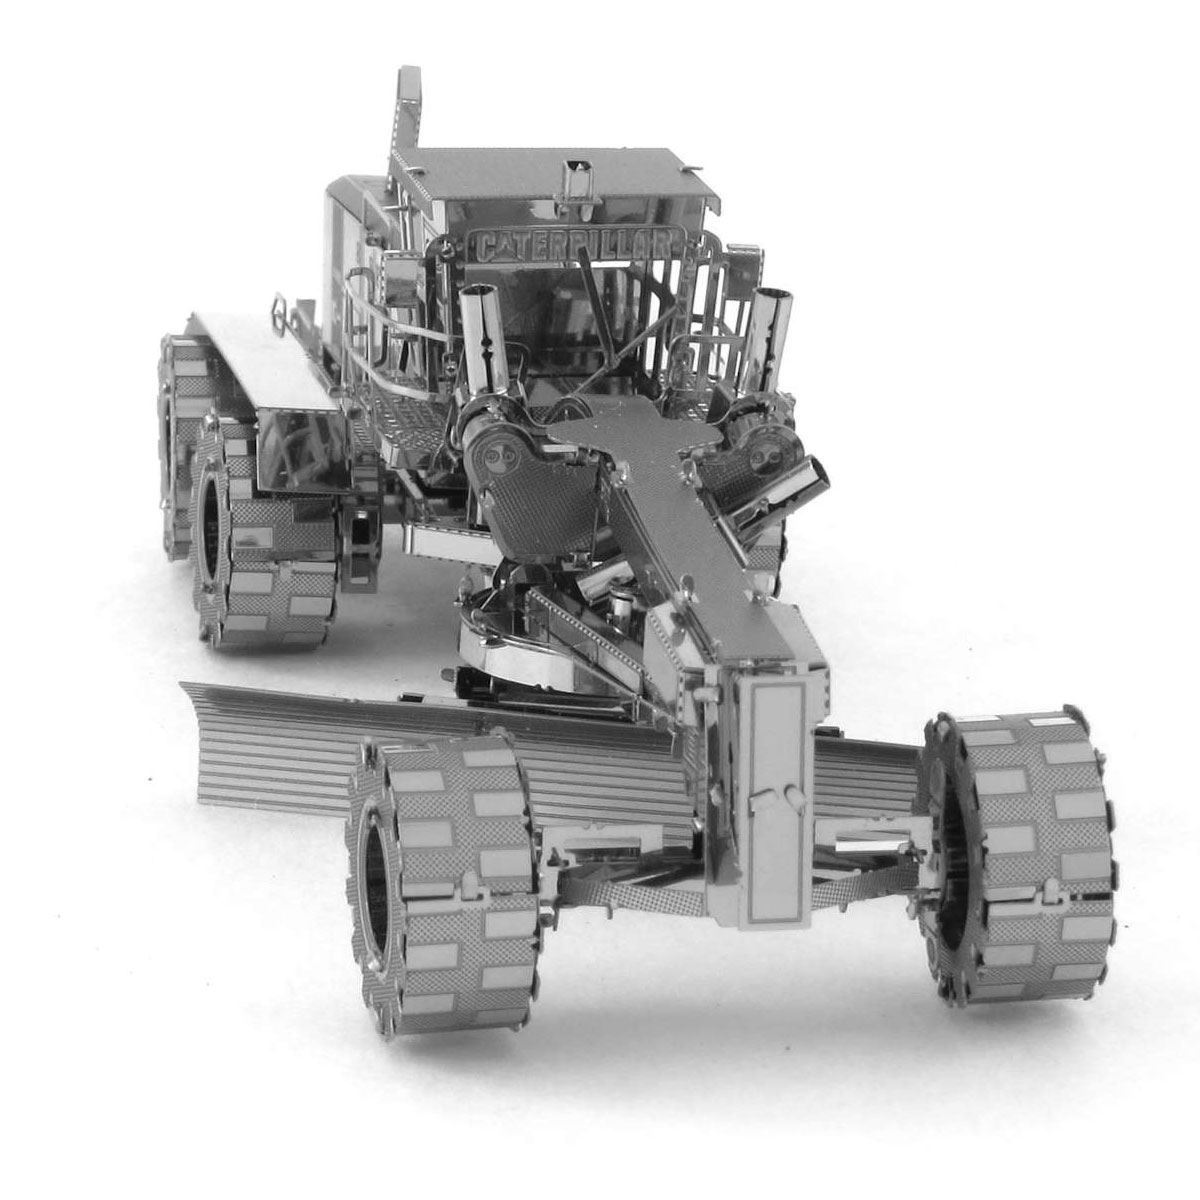 Metal Earth Cat Caterpillar Wheel Loader 3d Laser Cut Model Kit for sale online 